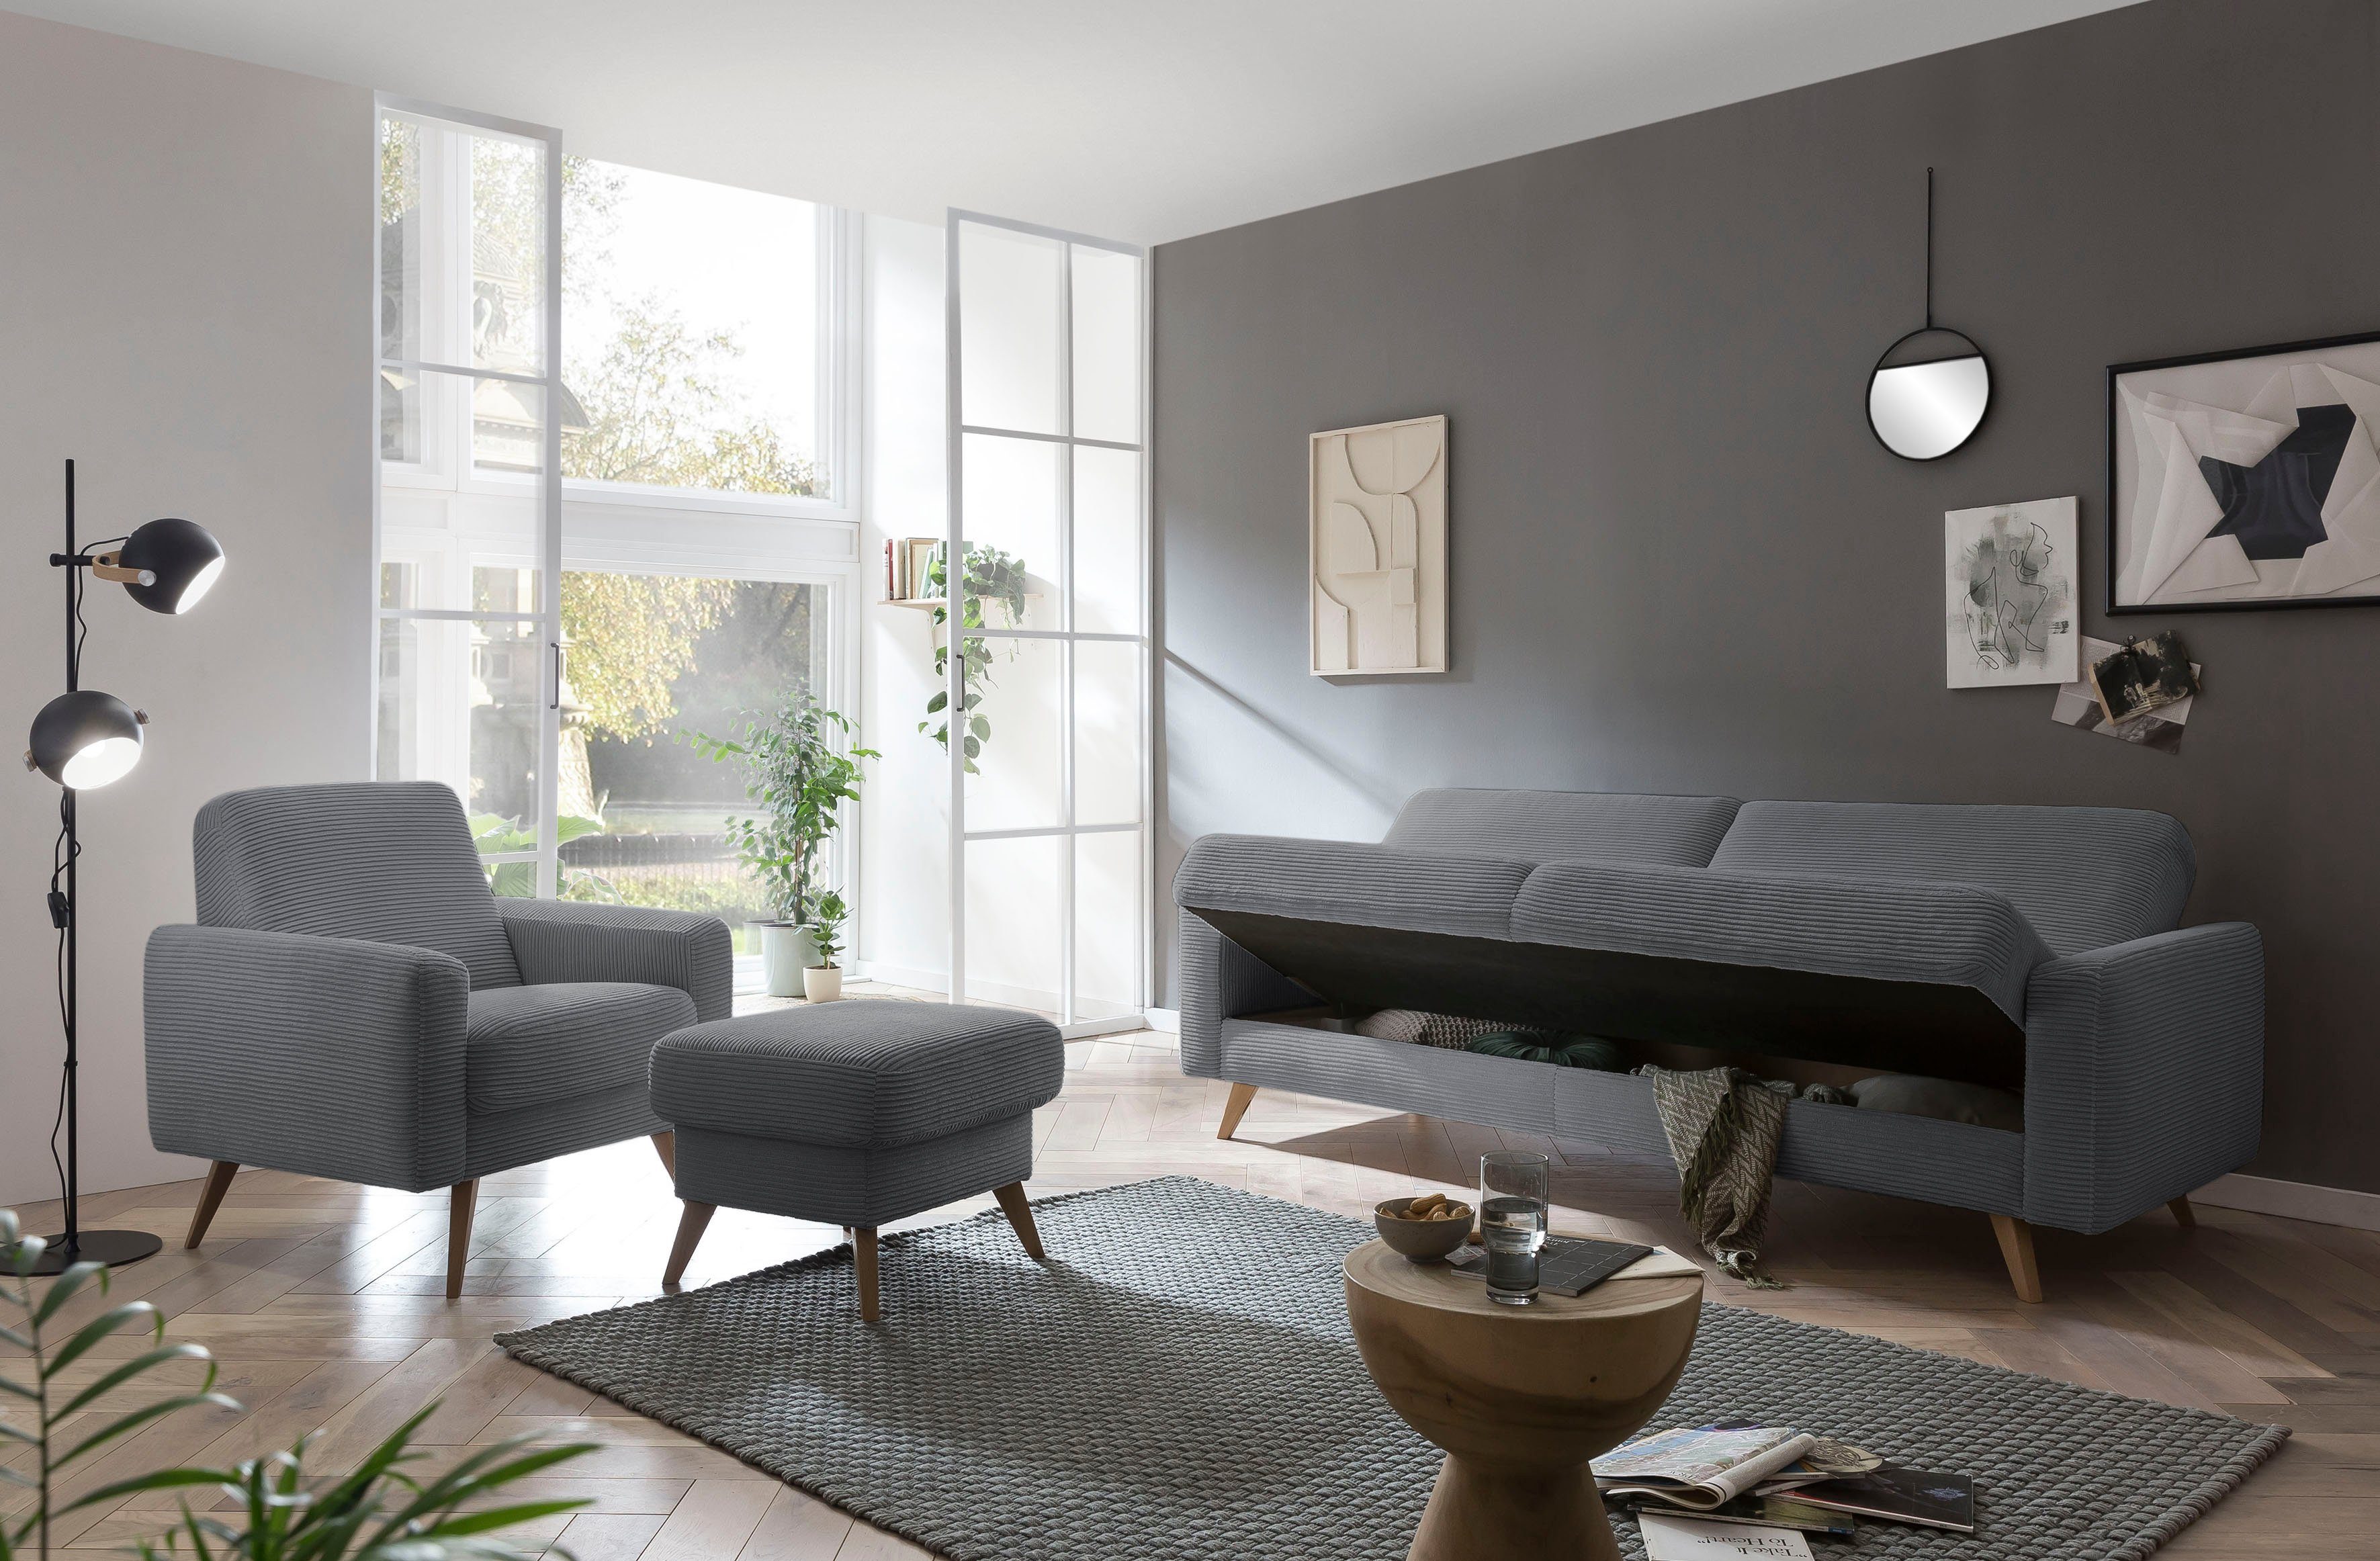 Bettkasten 3-Sitzer grey - Samso, und sofa fashion Inklusive exxpo Bettfunktion